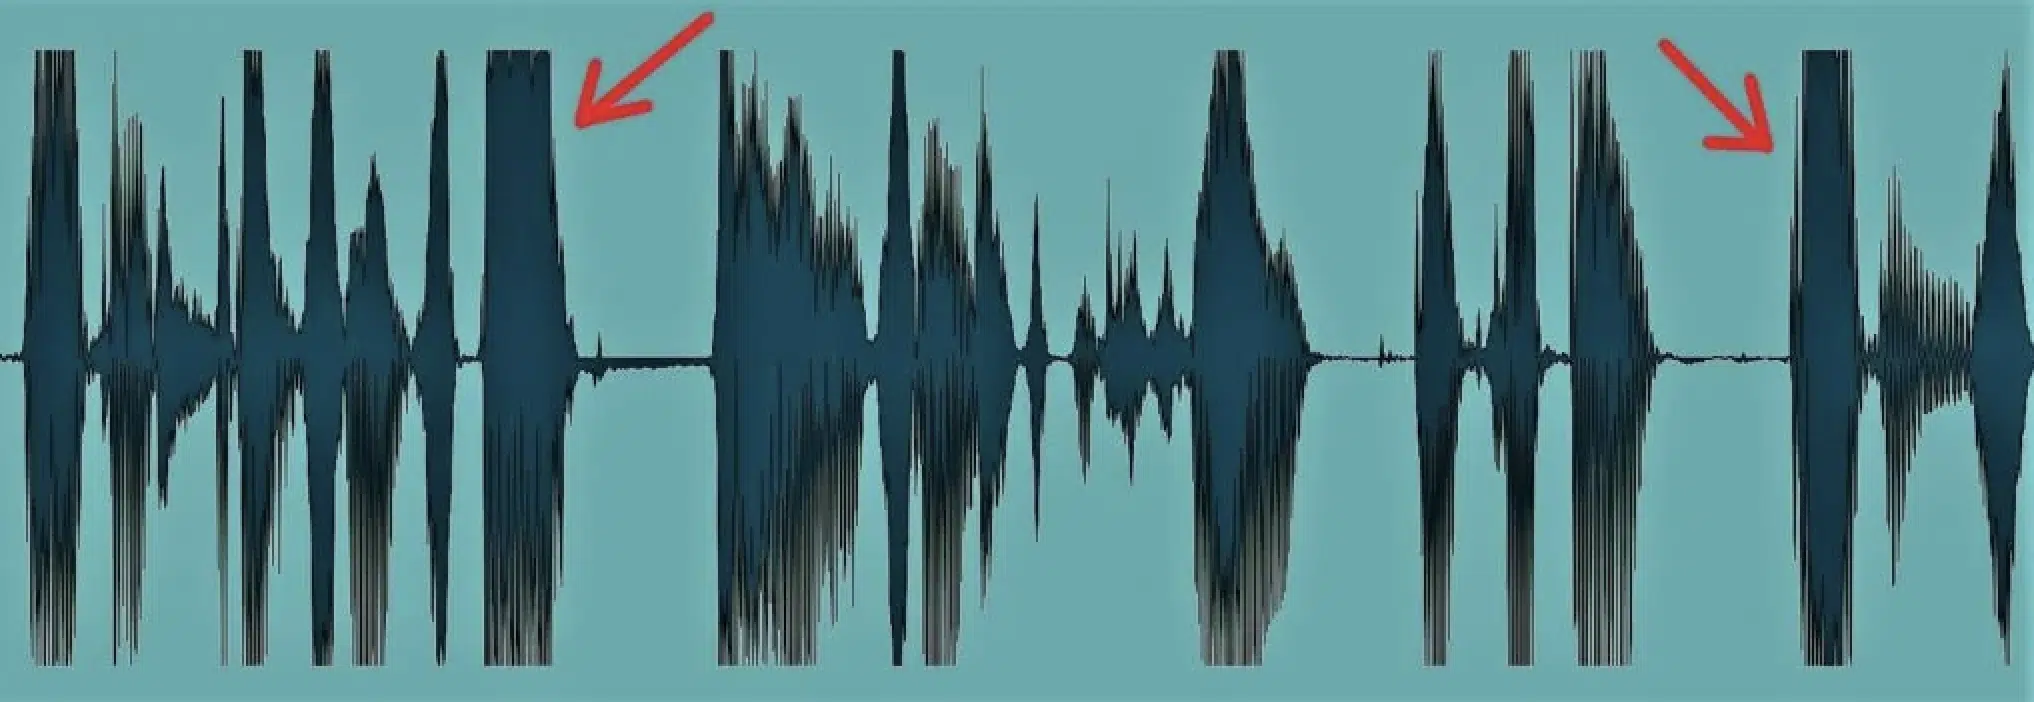 Audio Clipping2 - Unison